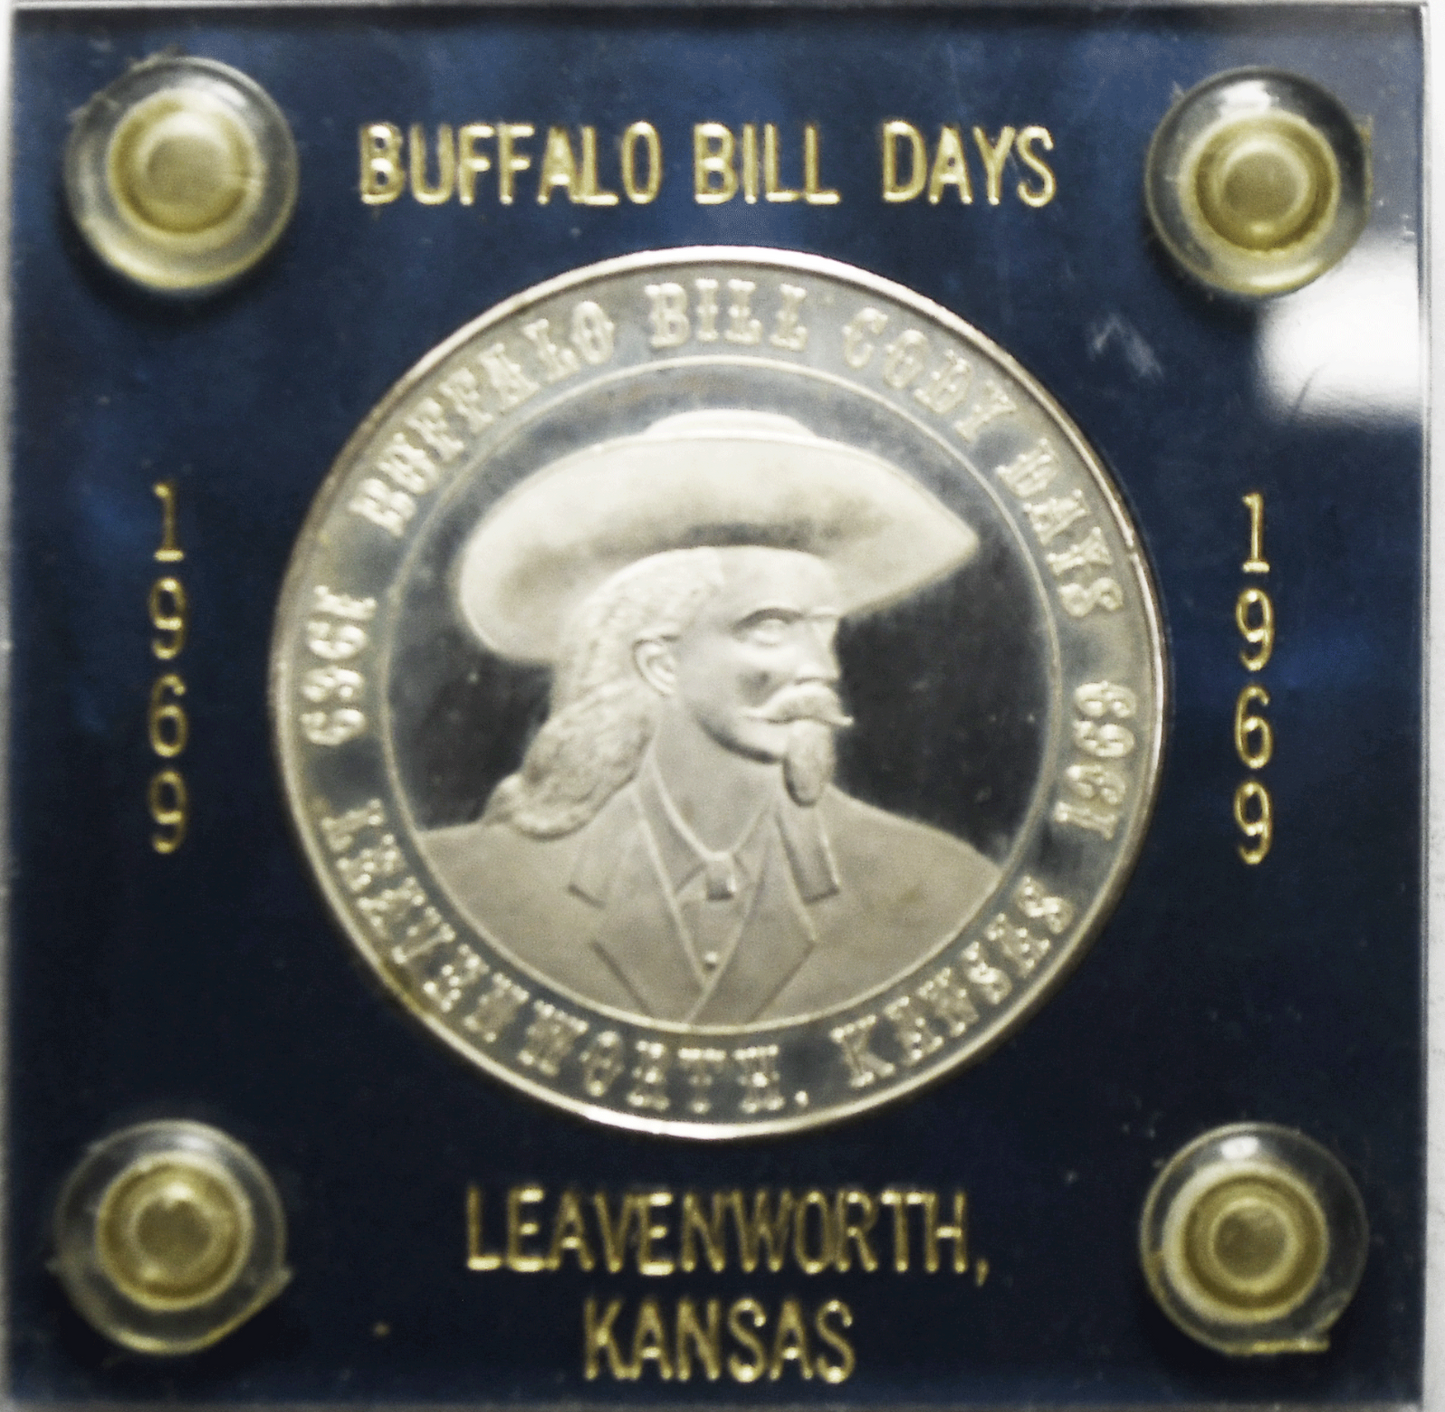 1966 Buffalo Bill Cody Days Leavenworth KS Proof 40mm 26.5g Sterling Silver